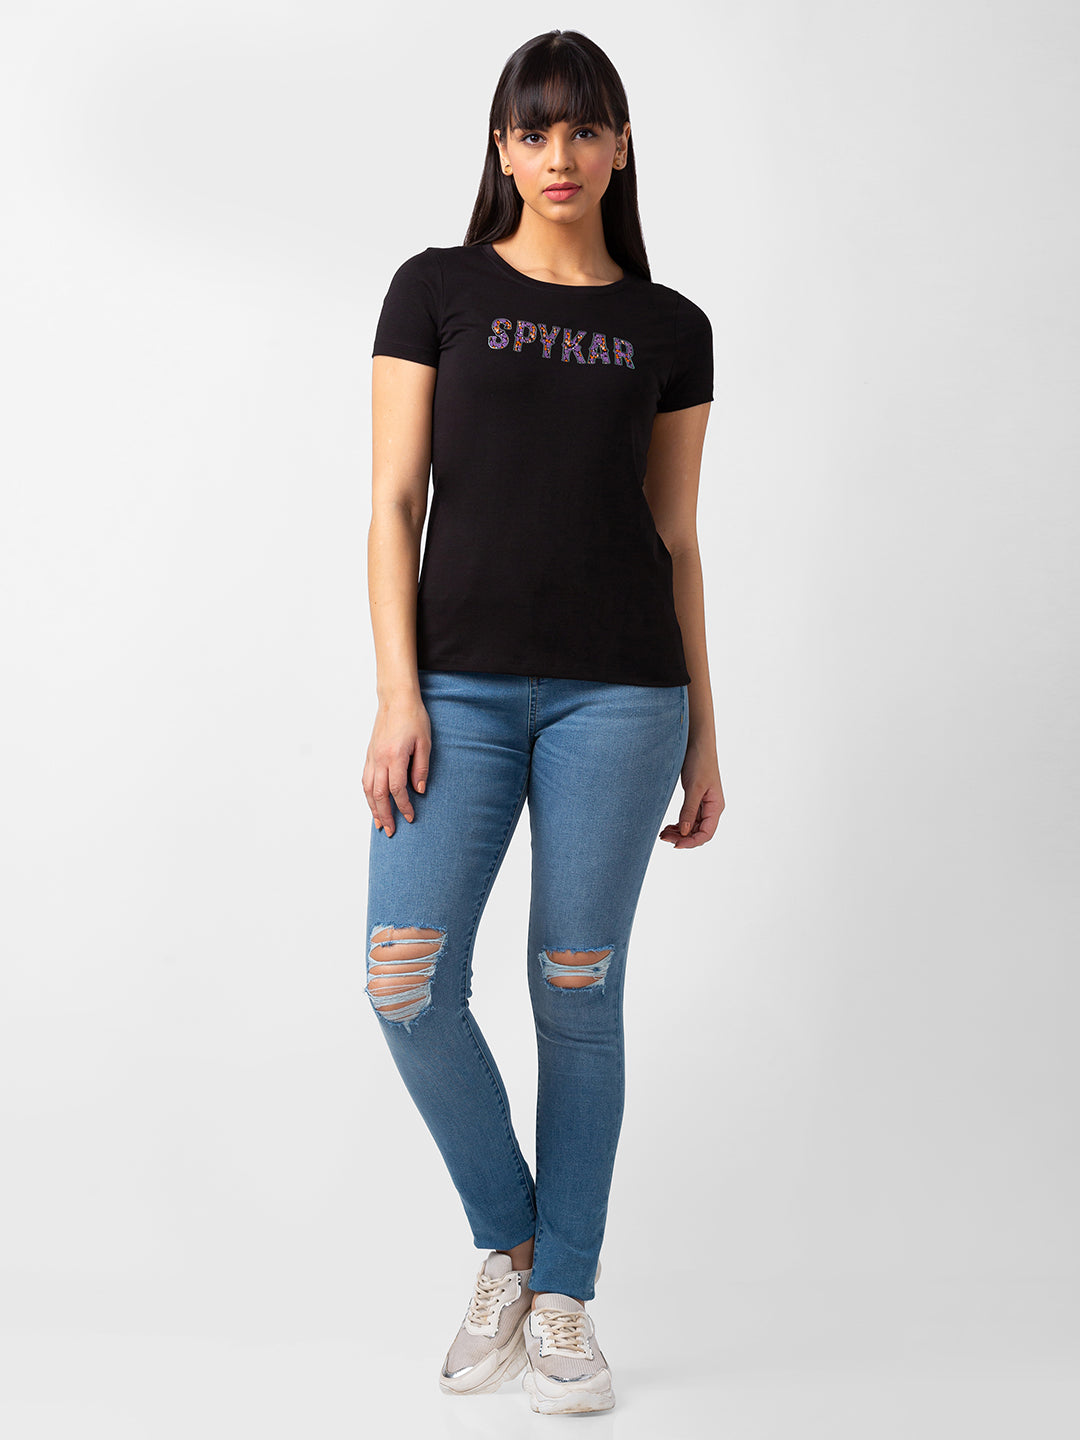 Spykar Women Black Blended Regular Fit Half Sleeve Printed T-Shirts